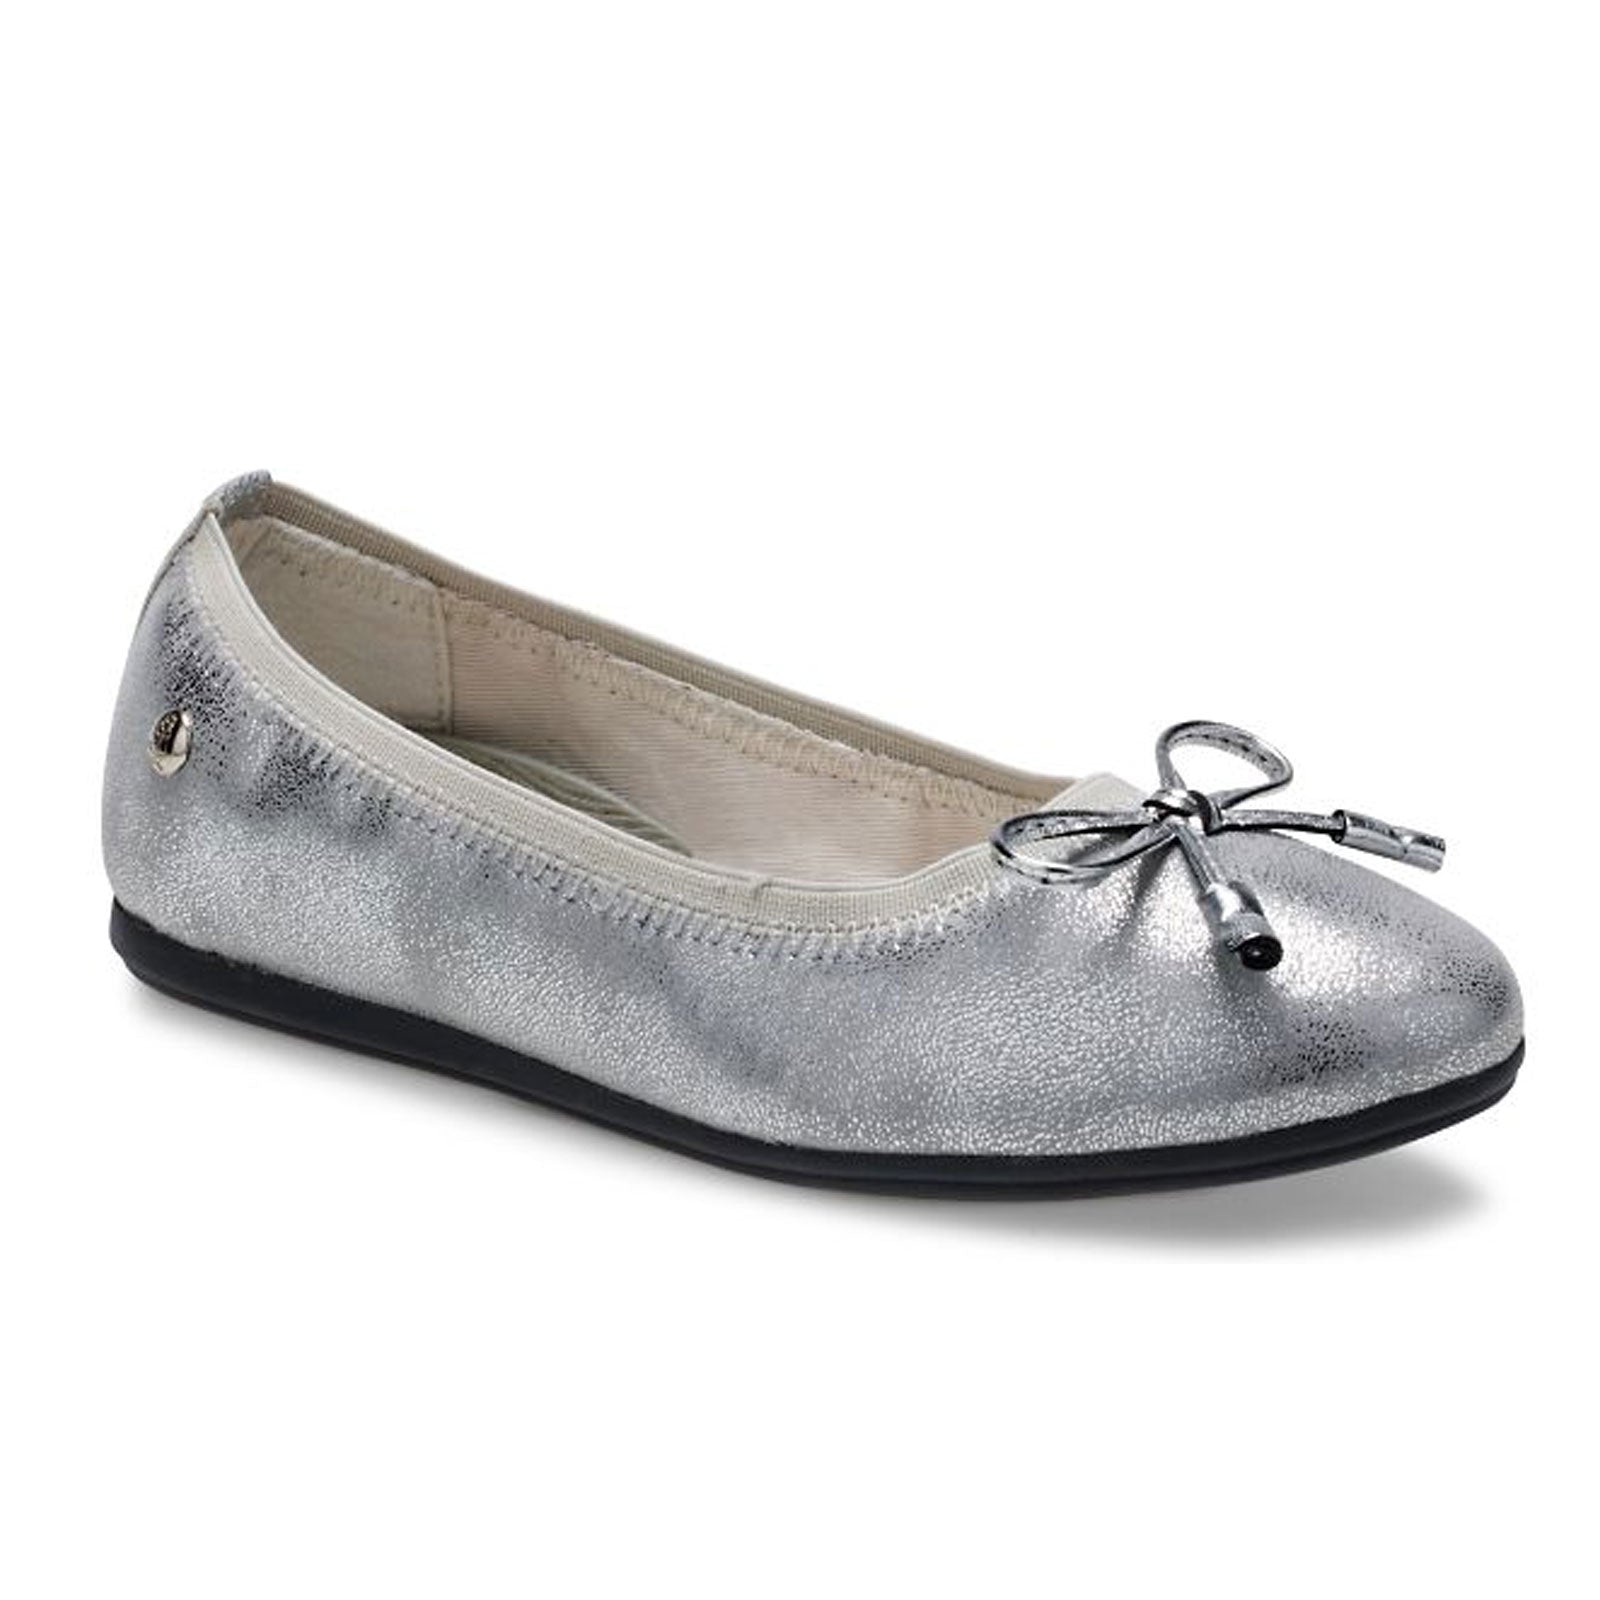 Hush Puppies Josie (Children) - Silver Dress-Casual - Flats - The Heel Shoe Fitters